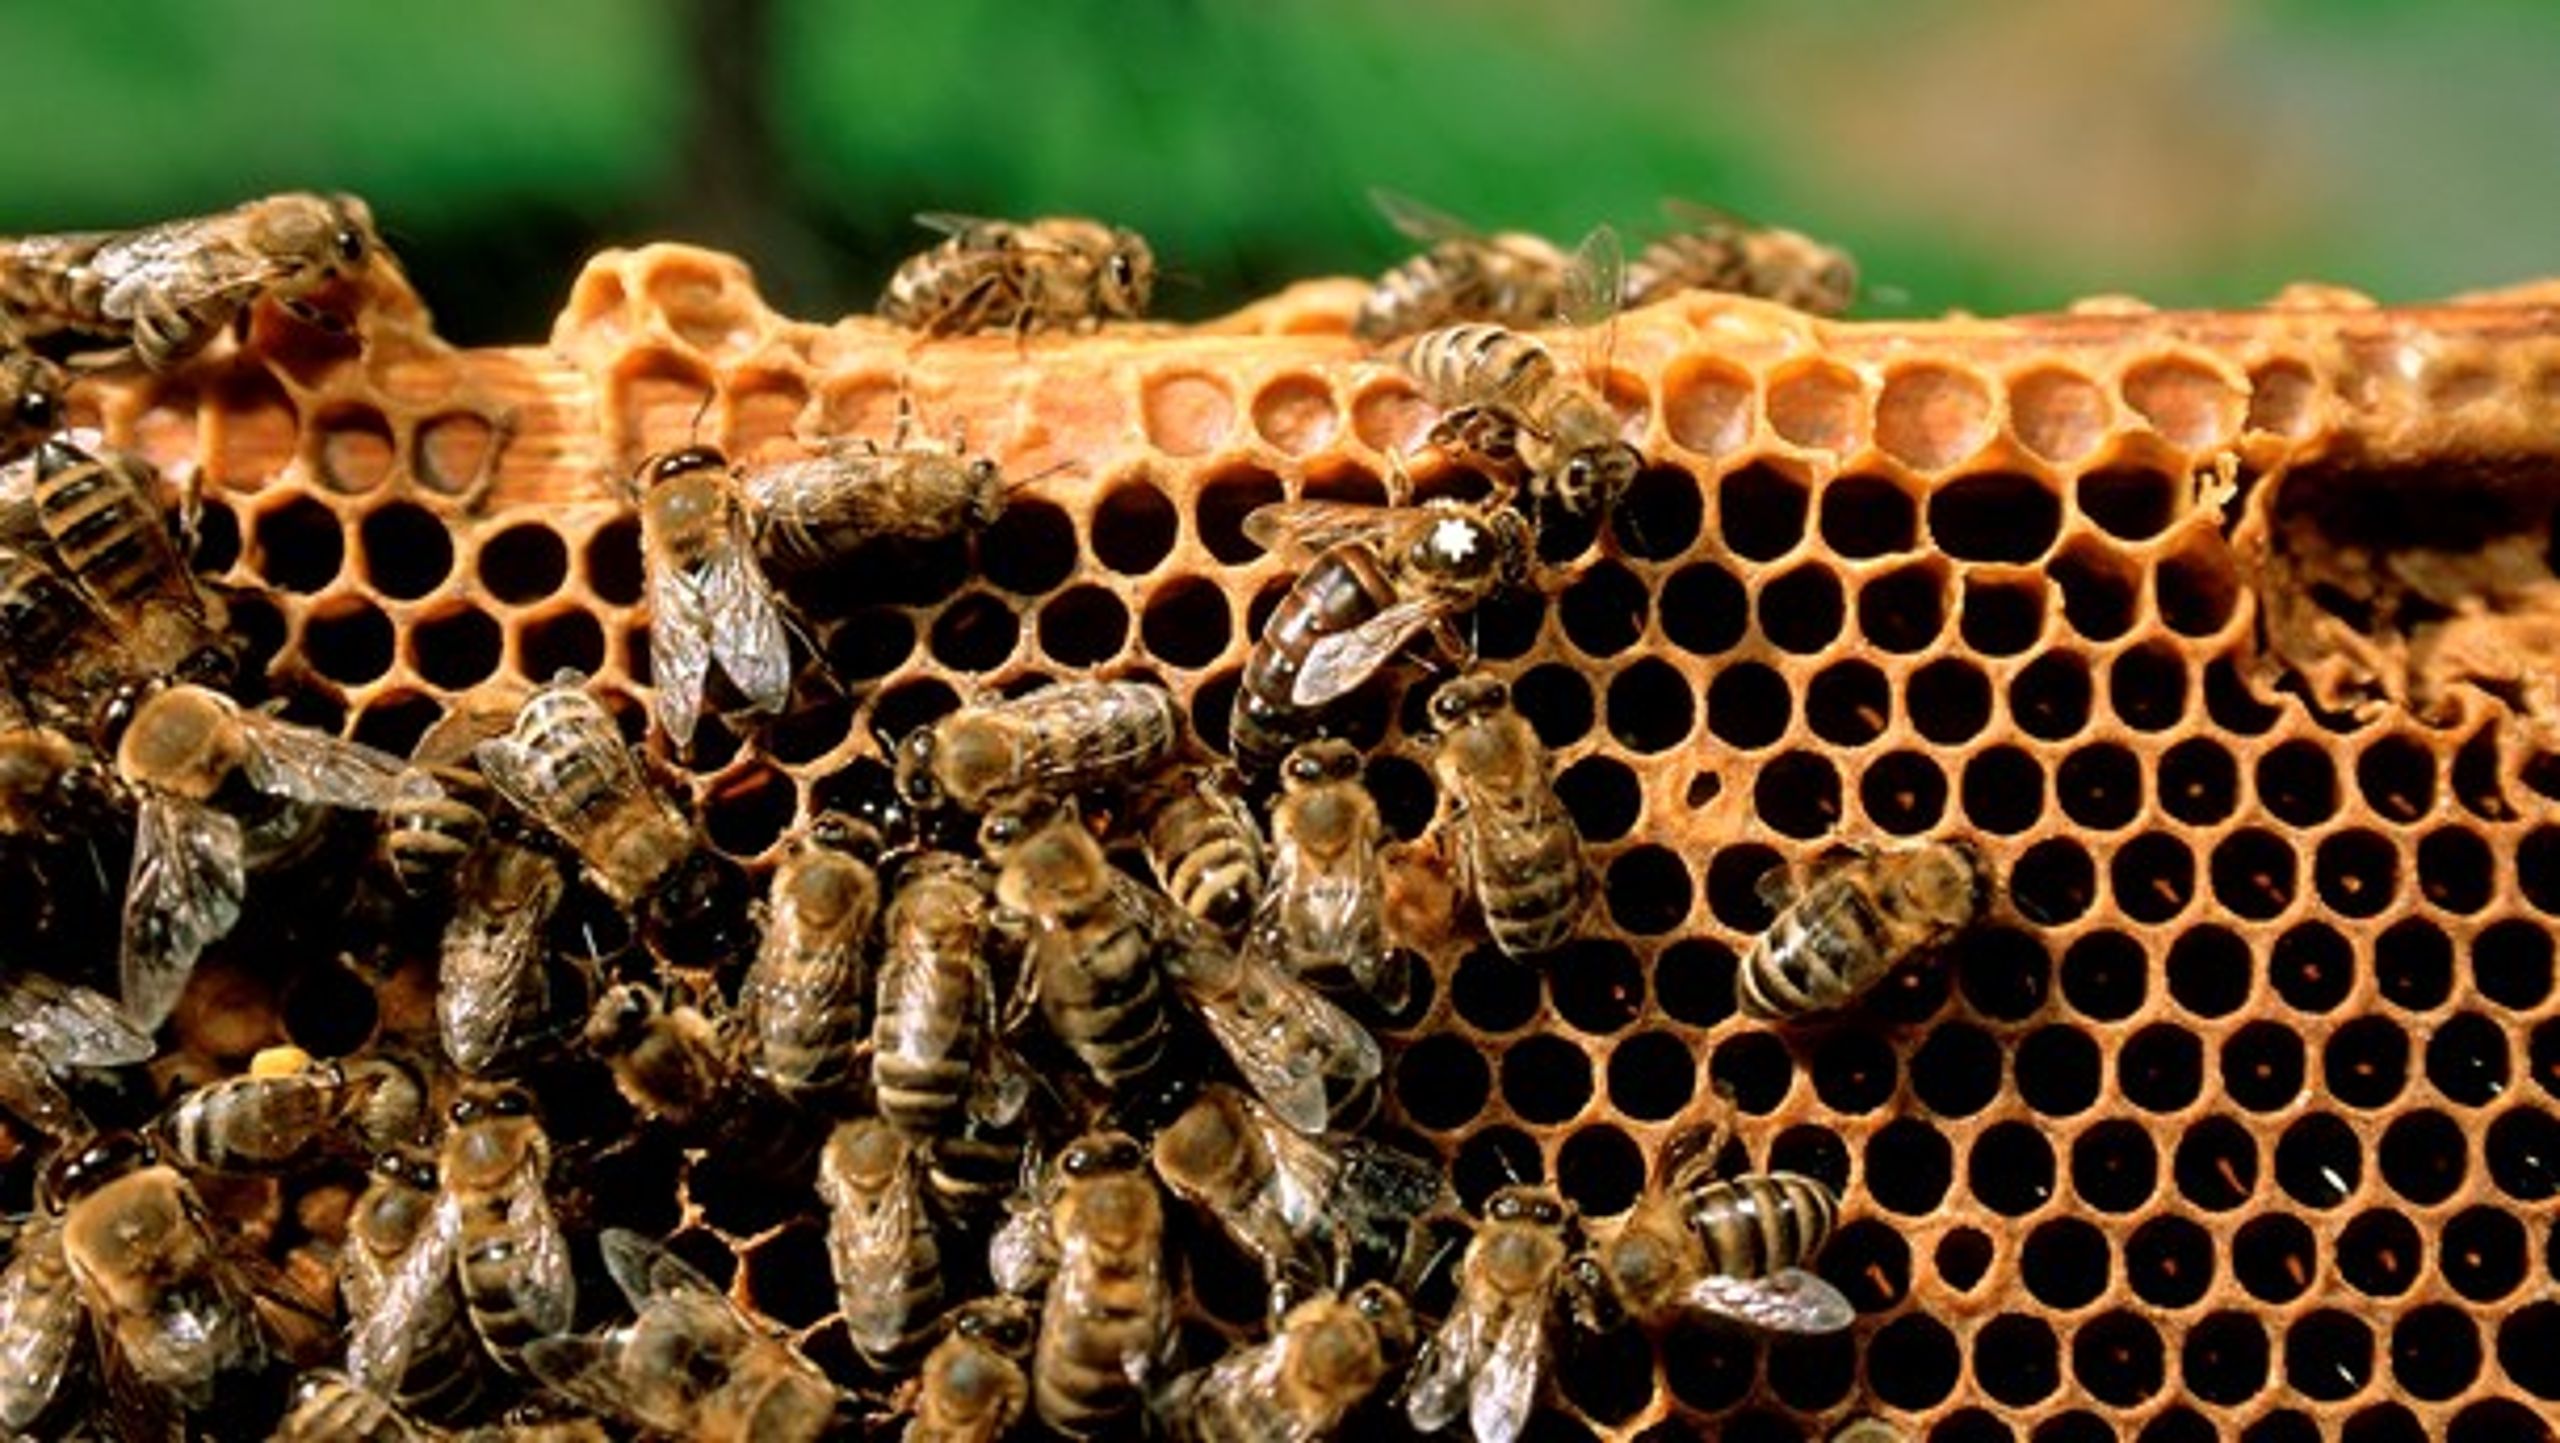 Honningbien er urimelig udskældt i debatten om bier, mener formanden for Danmarks Biavlerforening.